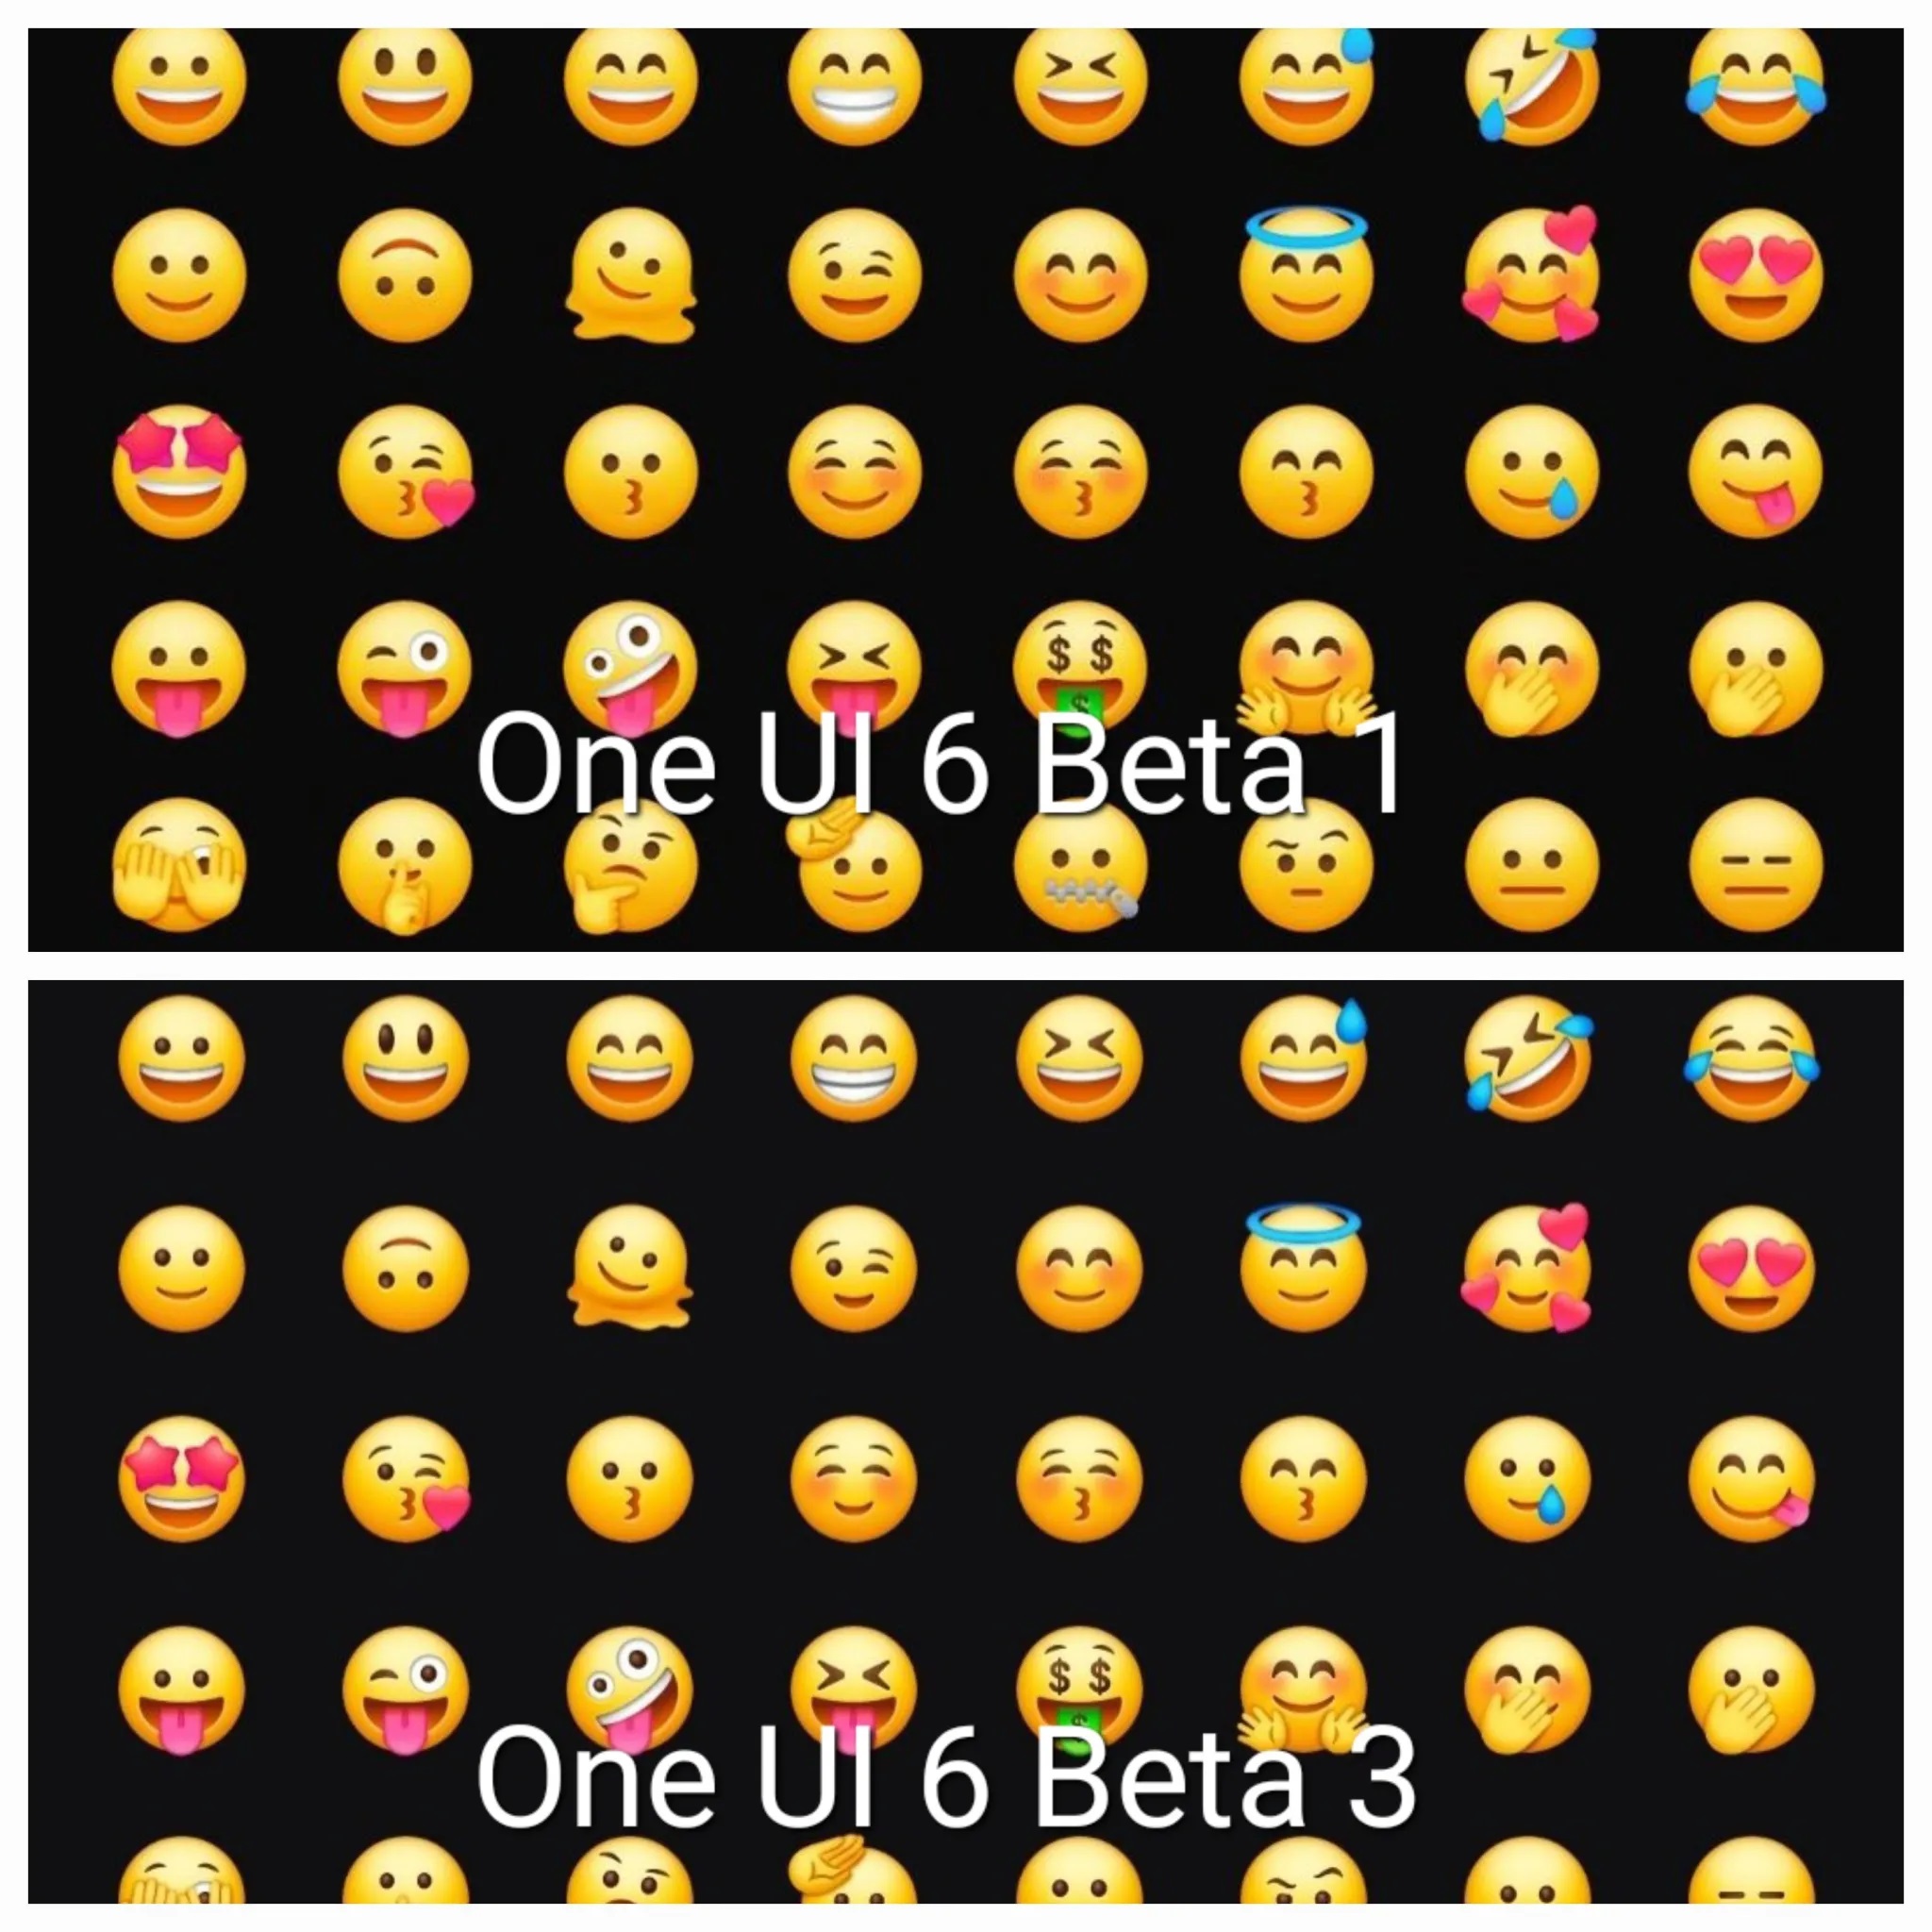 Samsung improves its emoji in One UI 6 Beta 3